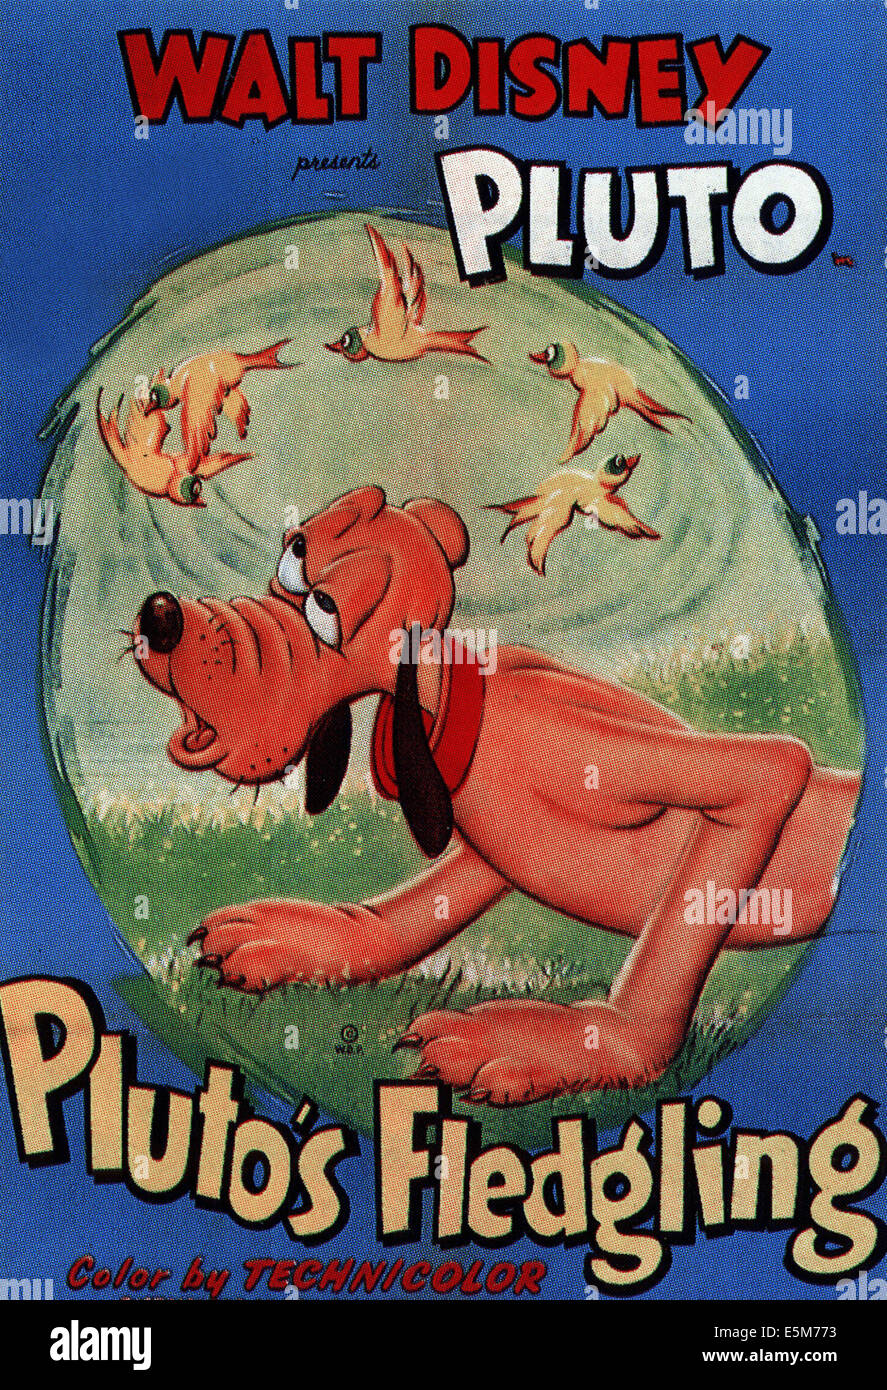 PLUTO'S FLEDGLING, poster art for Walt Disney animated short, Pluto, 1948 Stock Photo